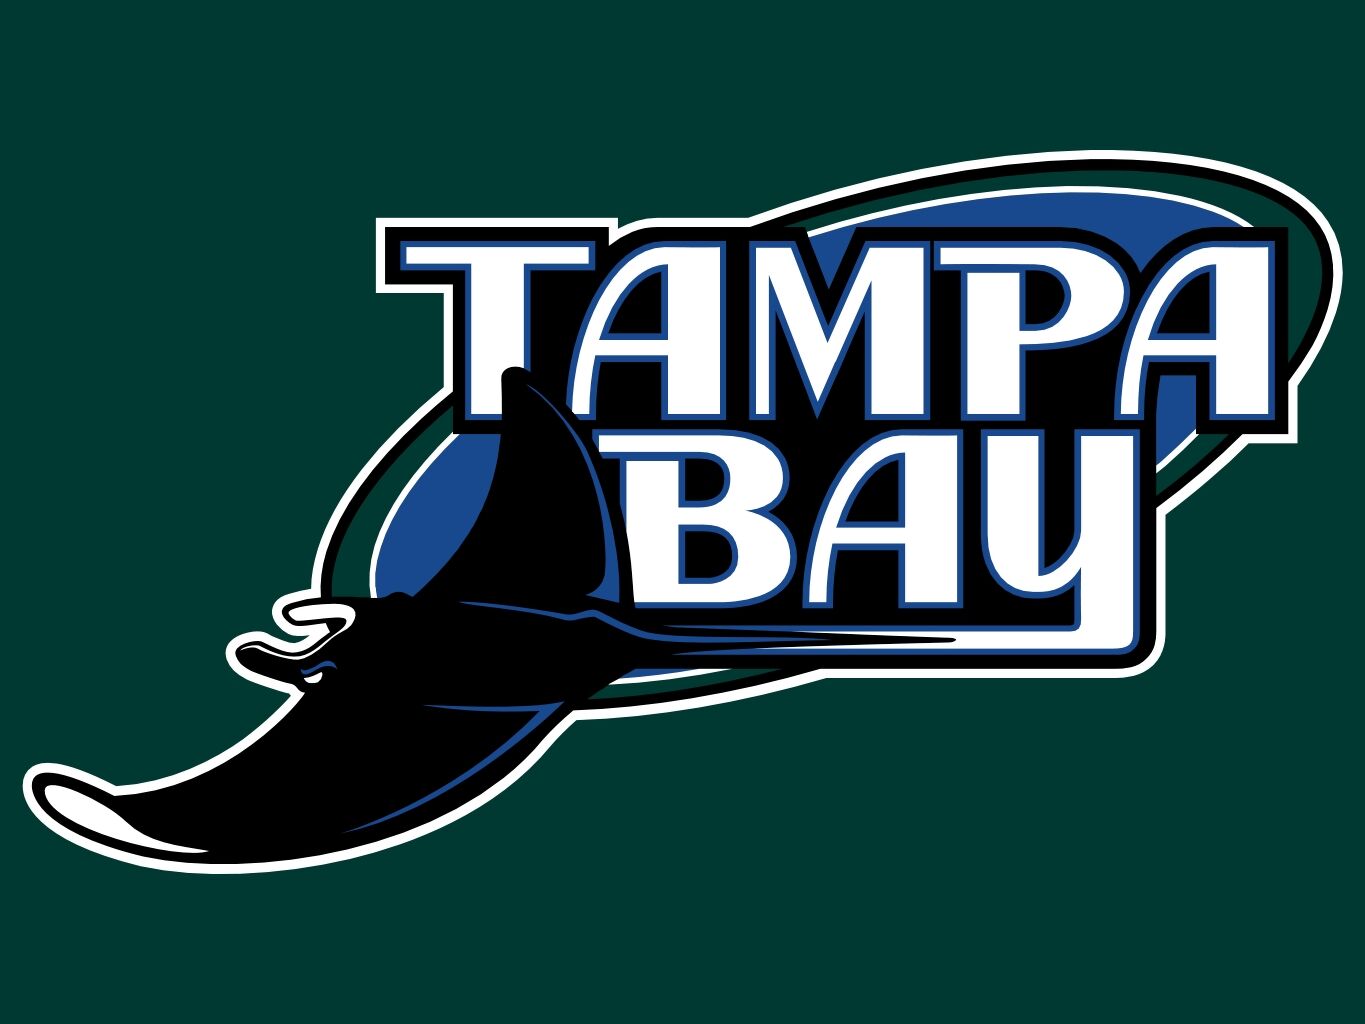 Tampa Bay Rays - Wikipedia